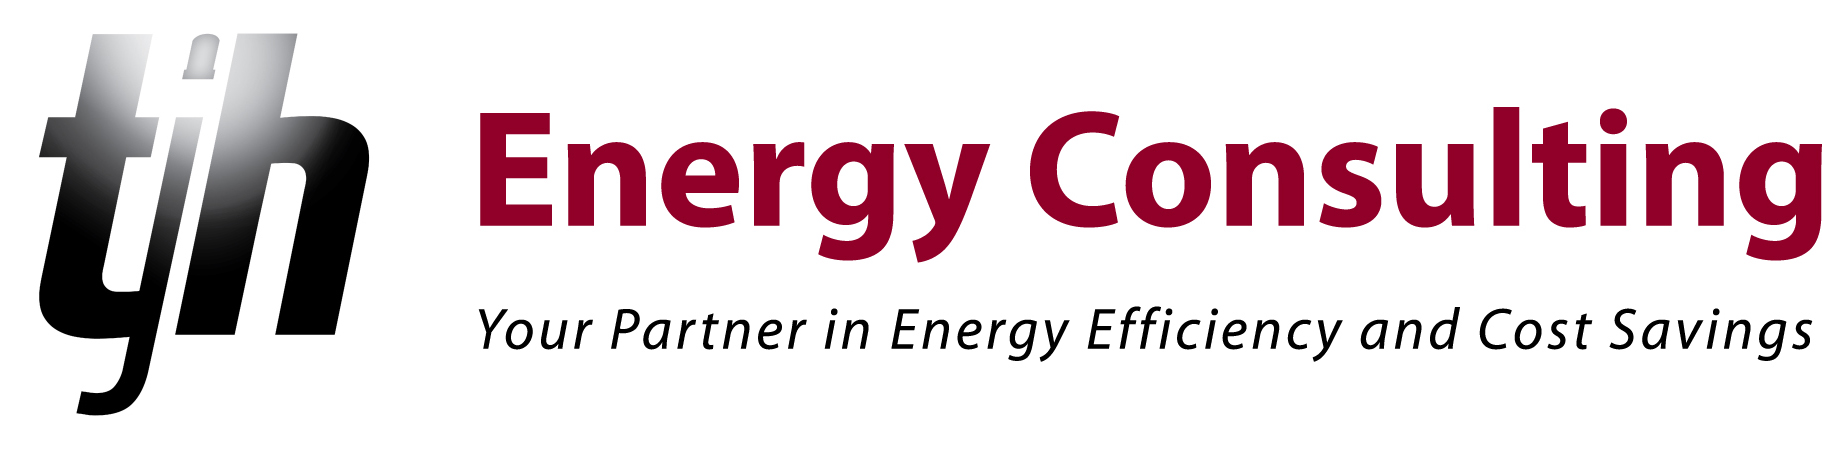 TJH Energy Consulting company logo